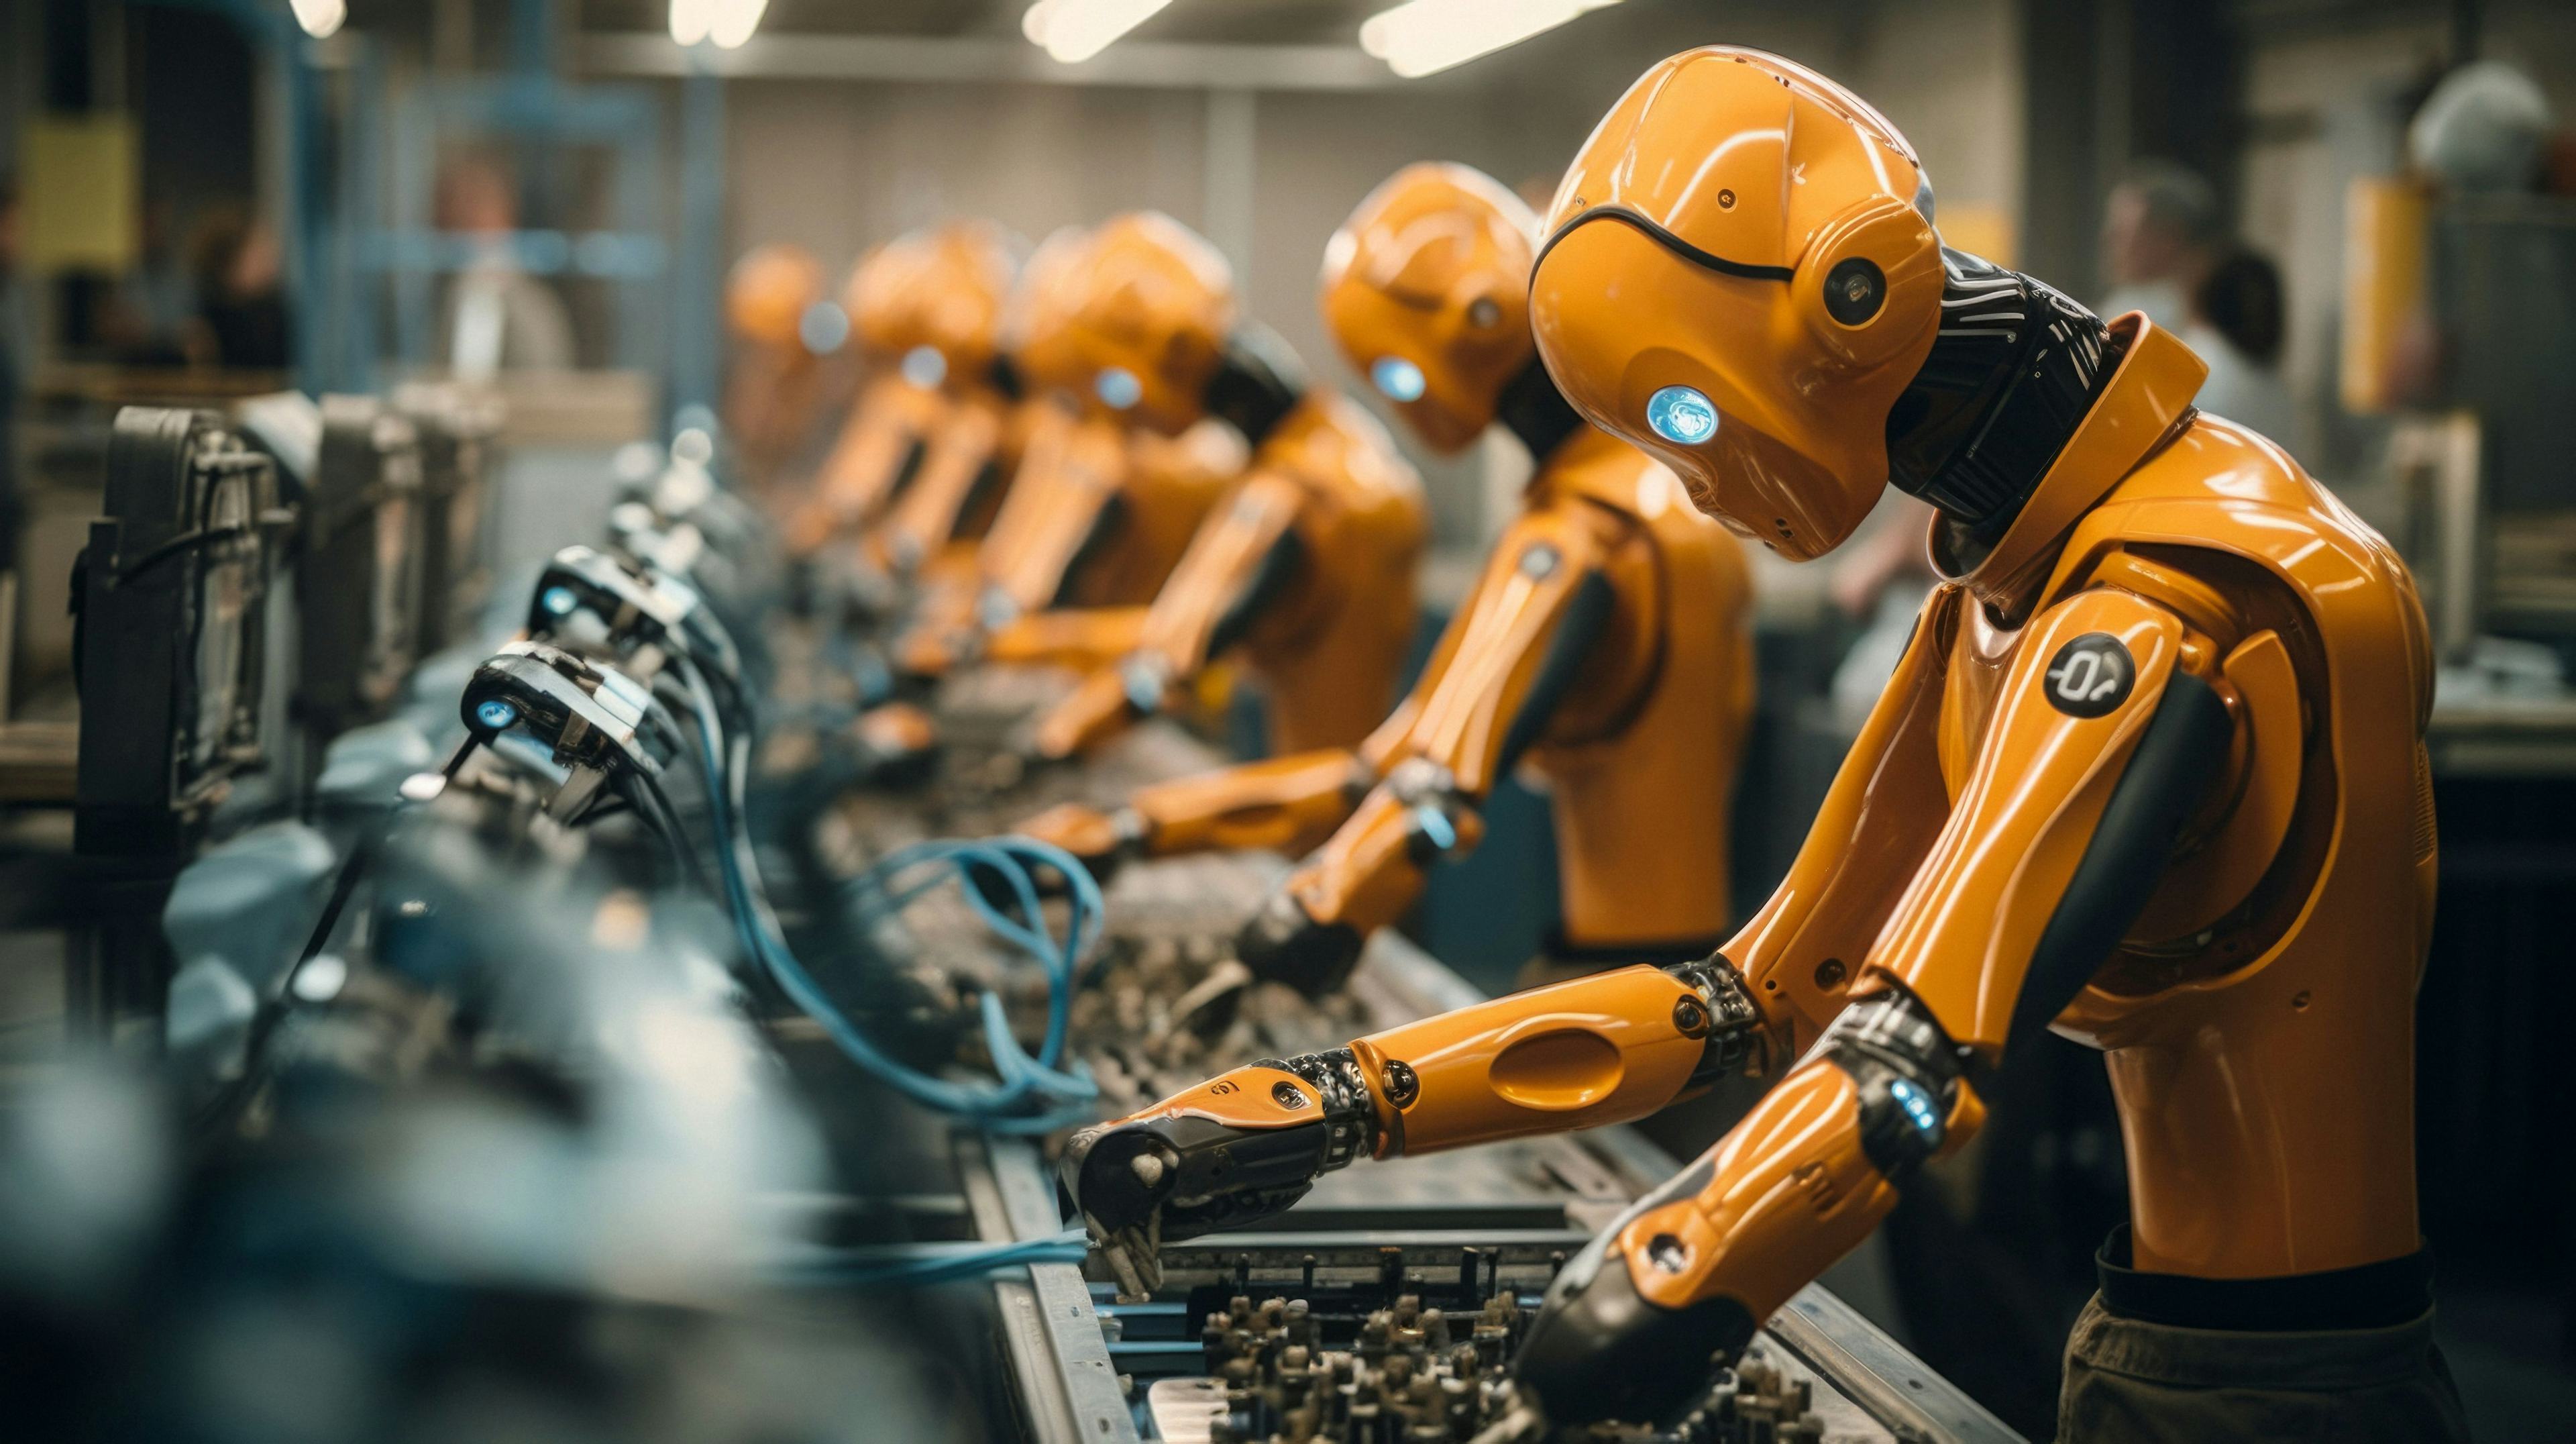 orange robots working in manufacturing factory